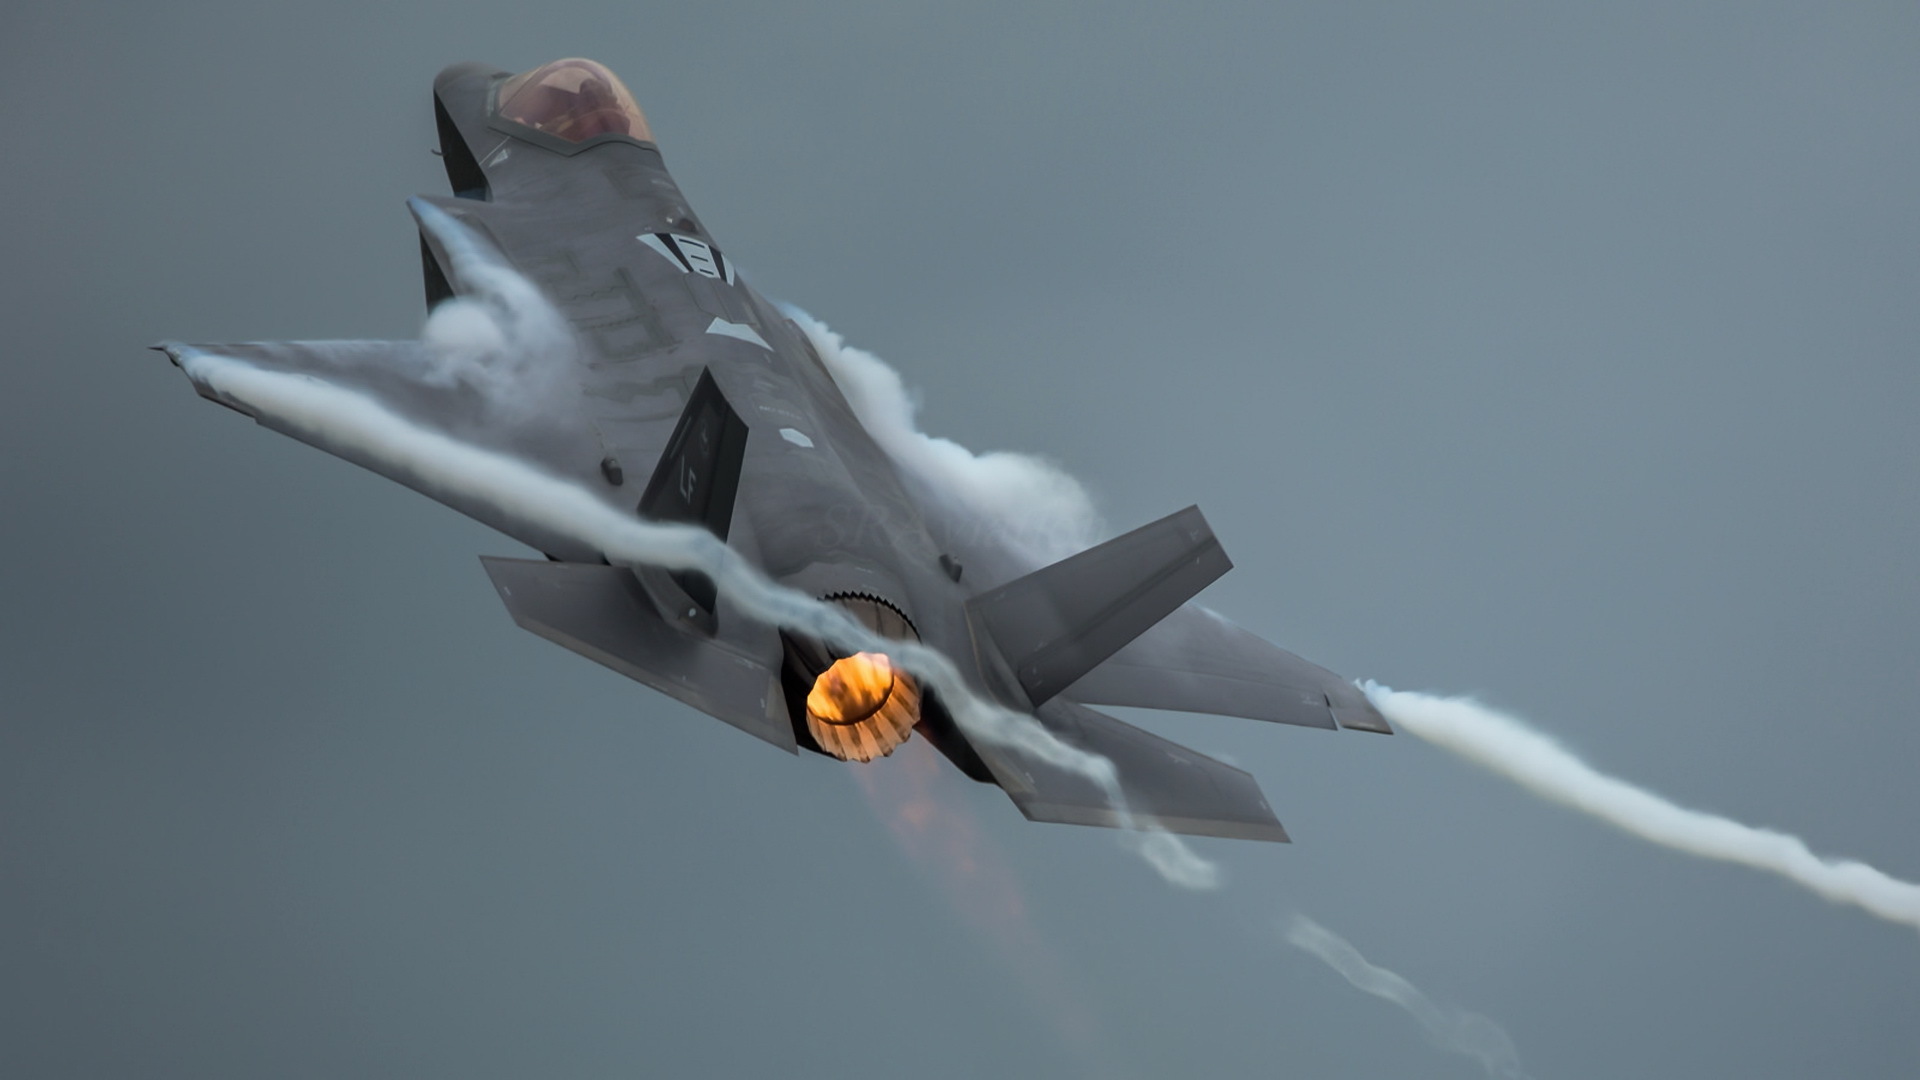 lockheed martin f 35 lightning ii, military, aircraft, jet fighter, warplane, jet fighters